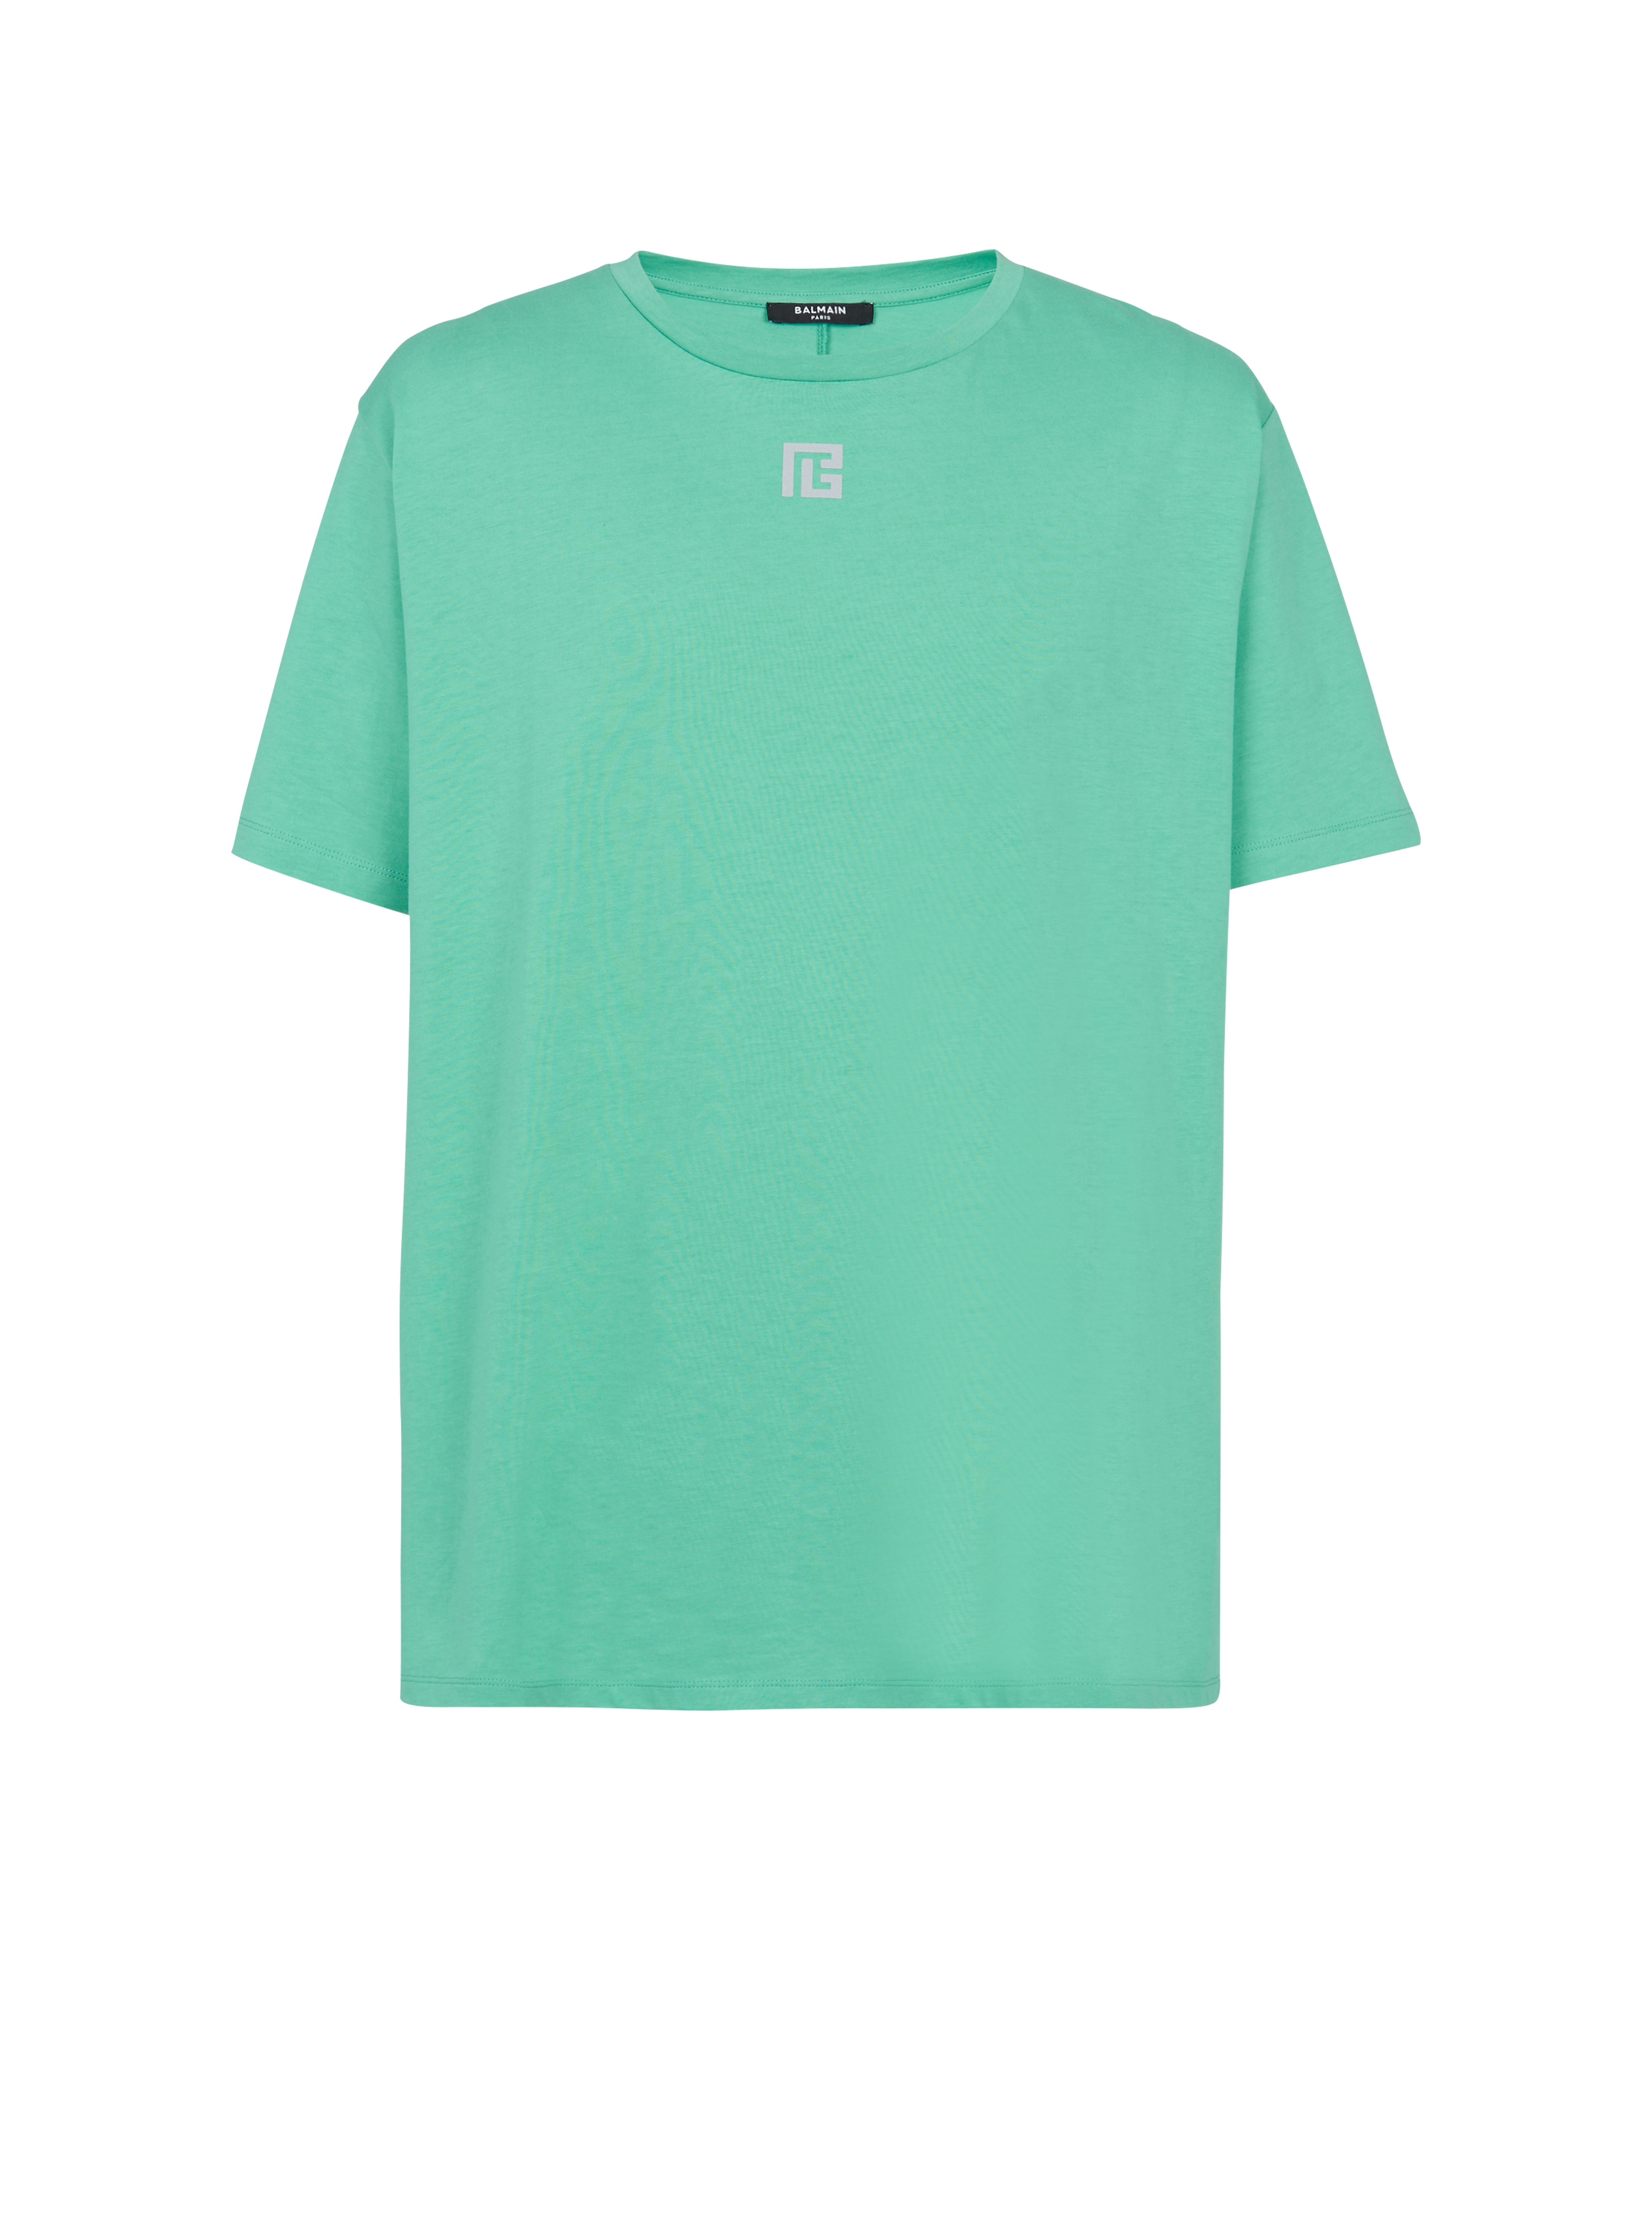 T-shirt in eco-responsible cotton with reflective Balmain maxi logo print, blue